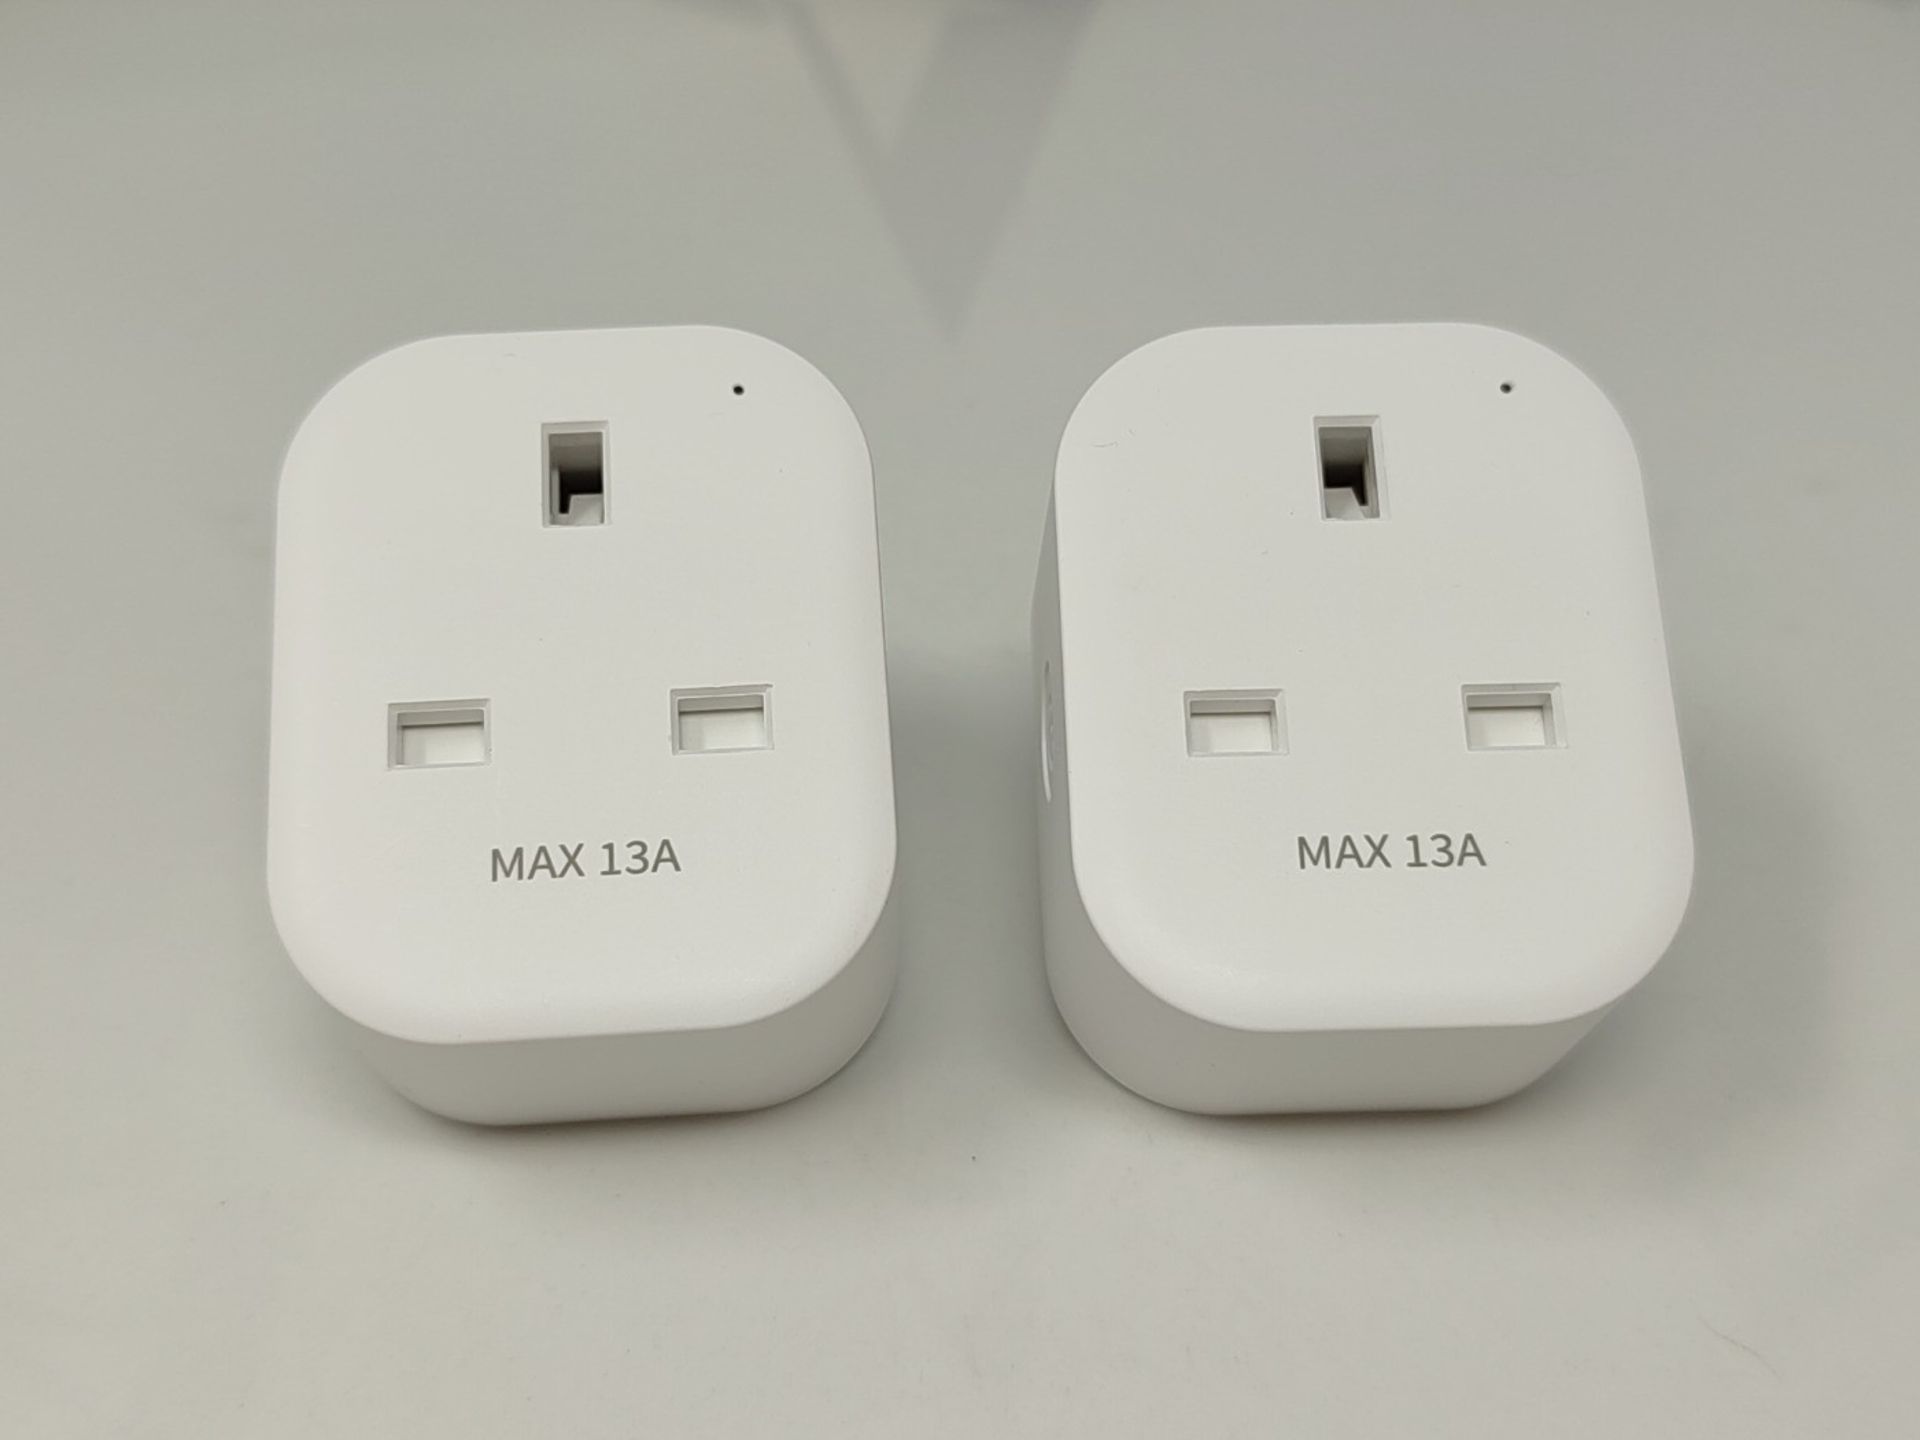 Mini meross MSS110 Smart Plug - WiFi Plugs Compatible with HomeKit, Alexa, Google Home - Image 3 of 3